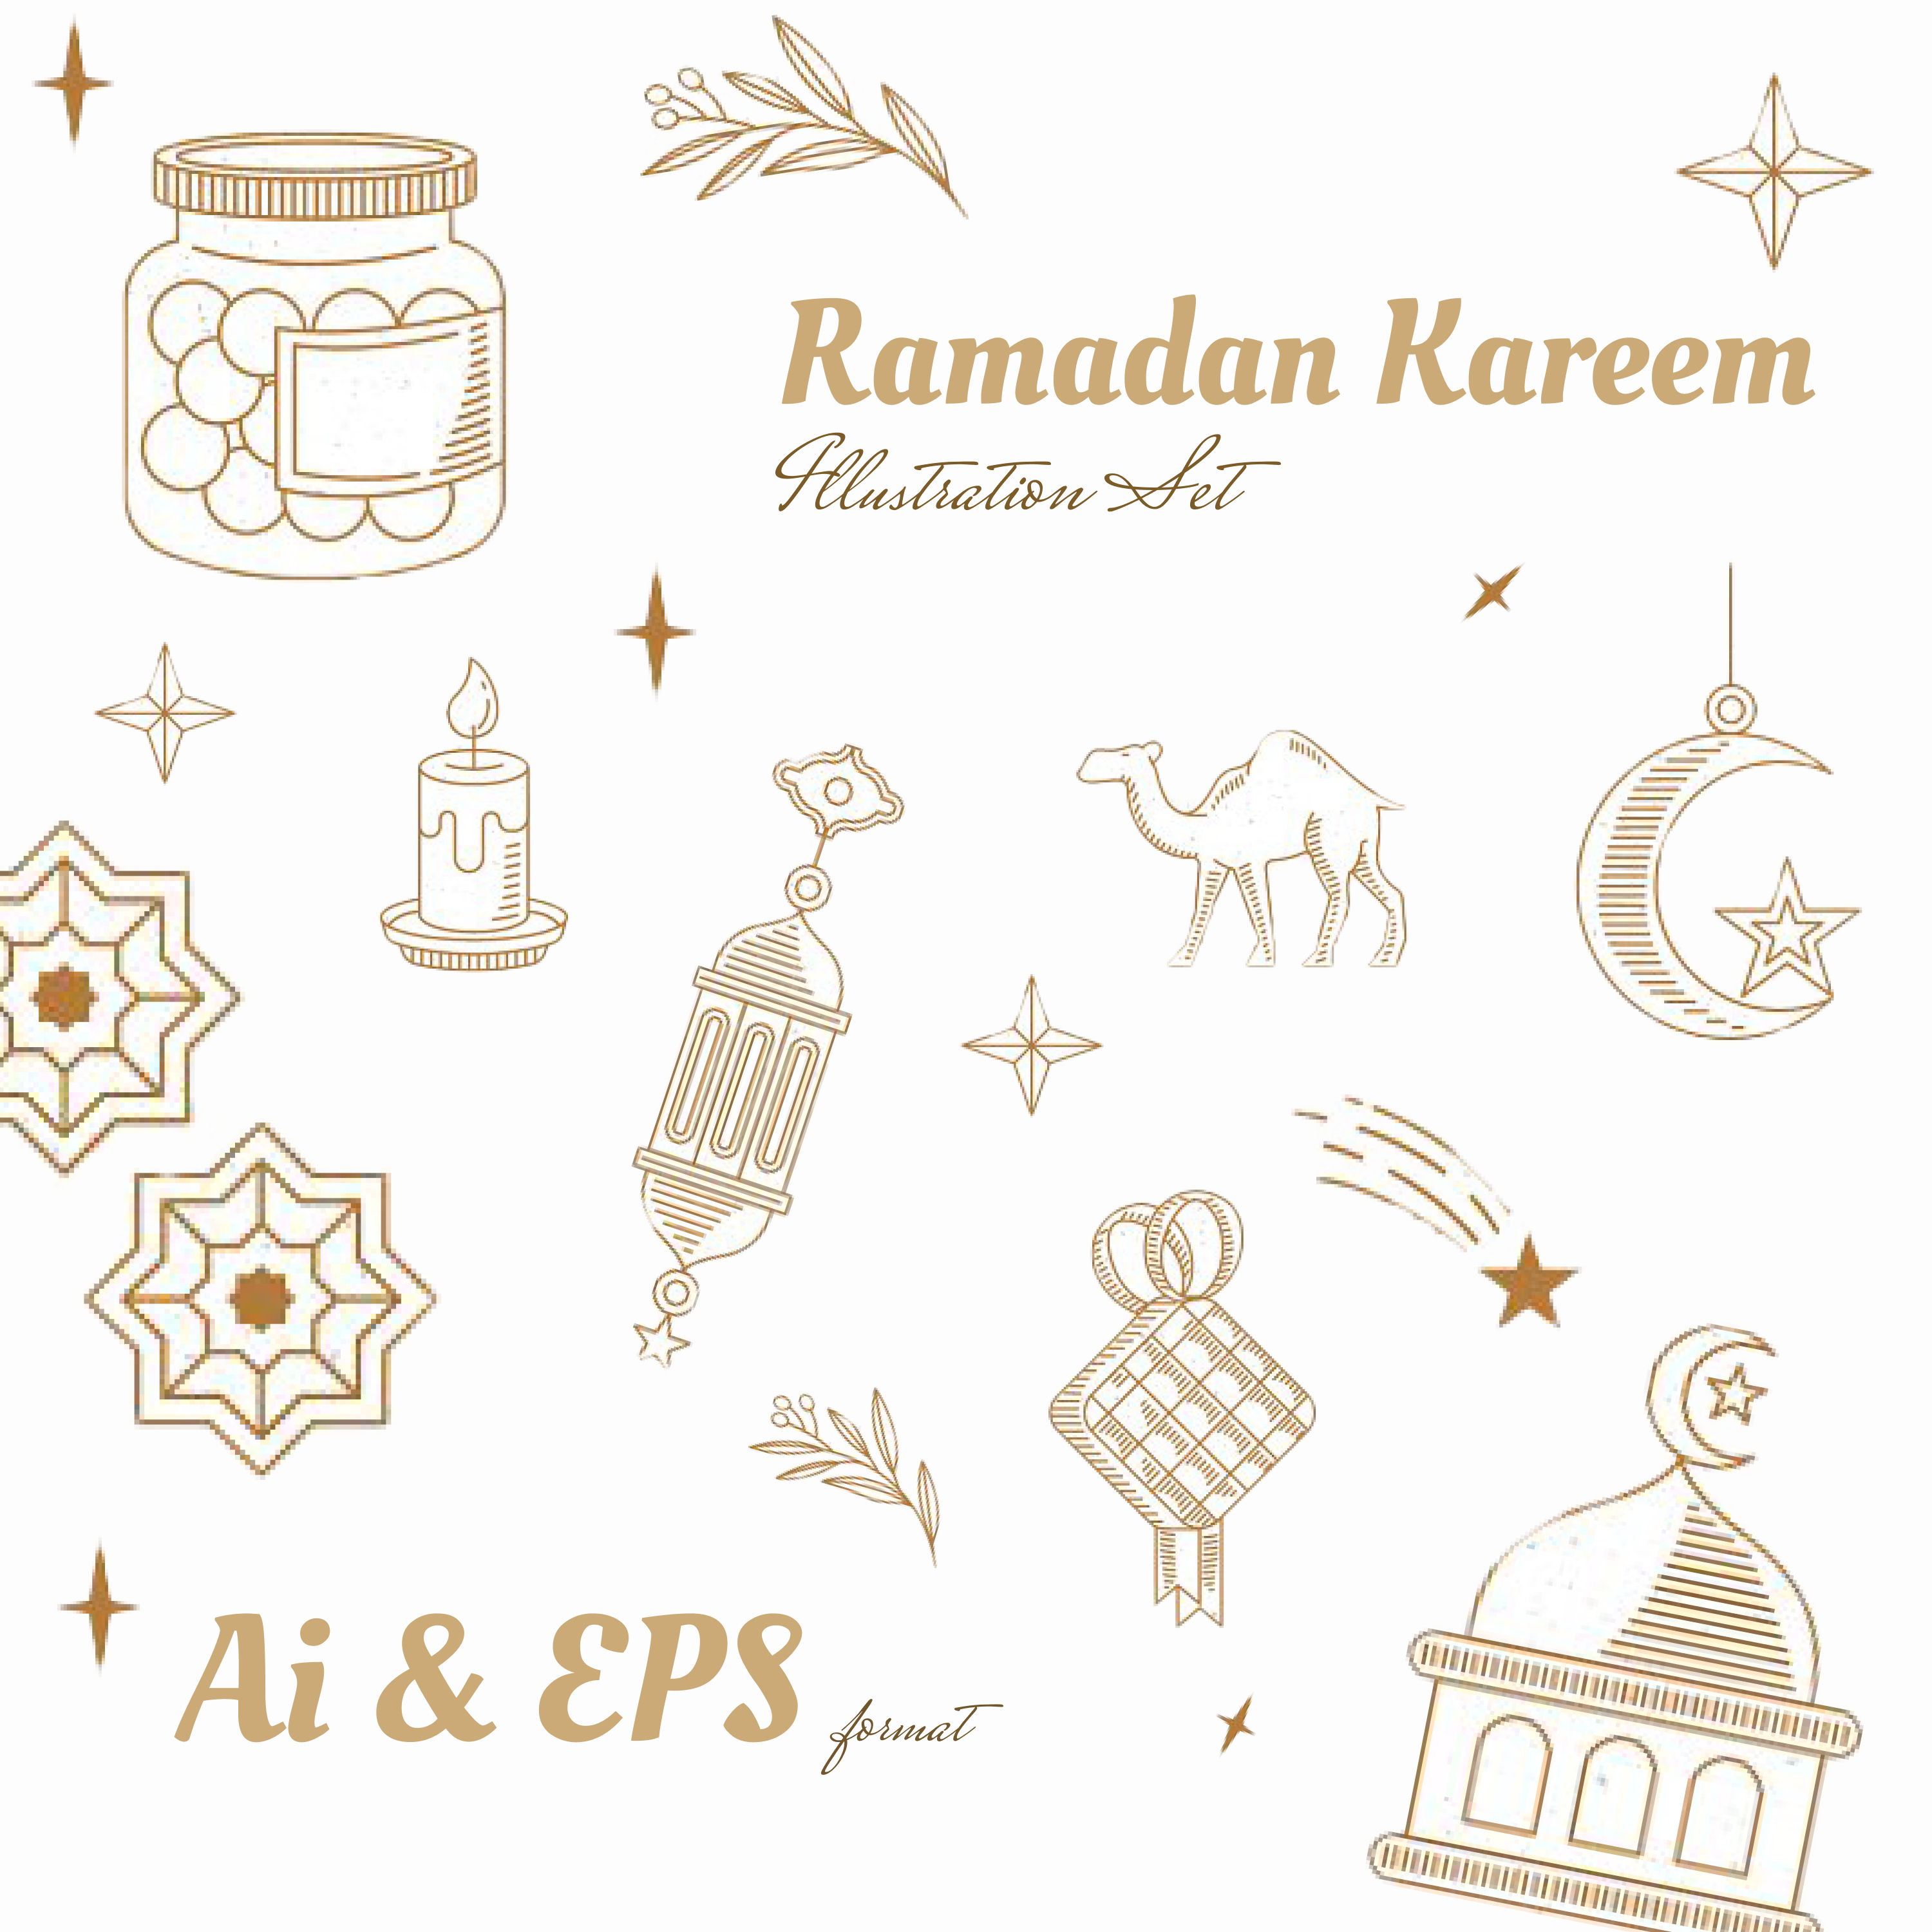 Prints of ramadan kareem illustration set.